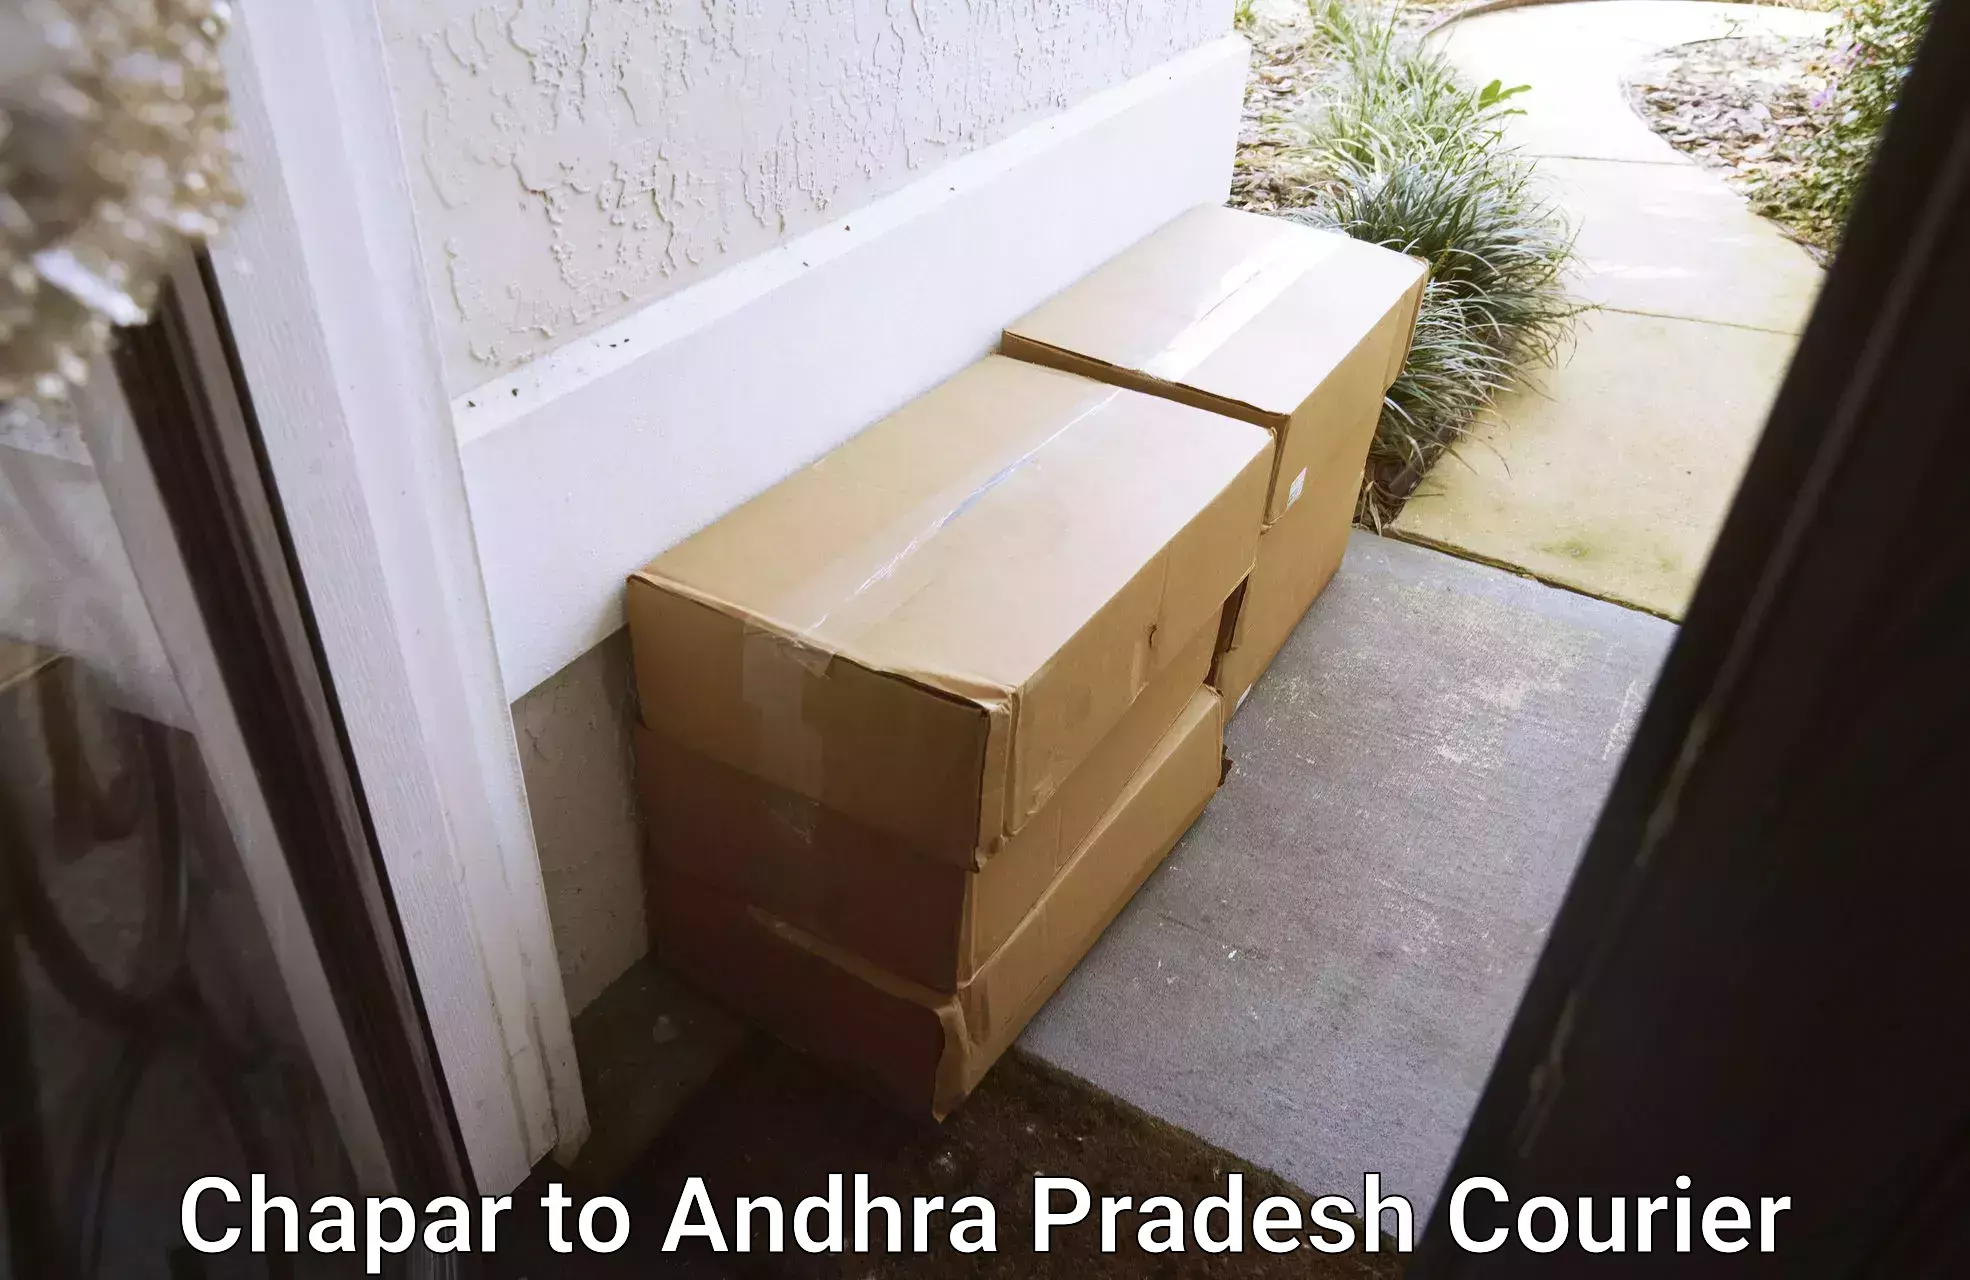 Custom courier packaging in Chapar to Andhra Pradesh